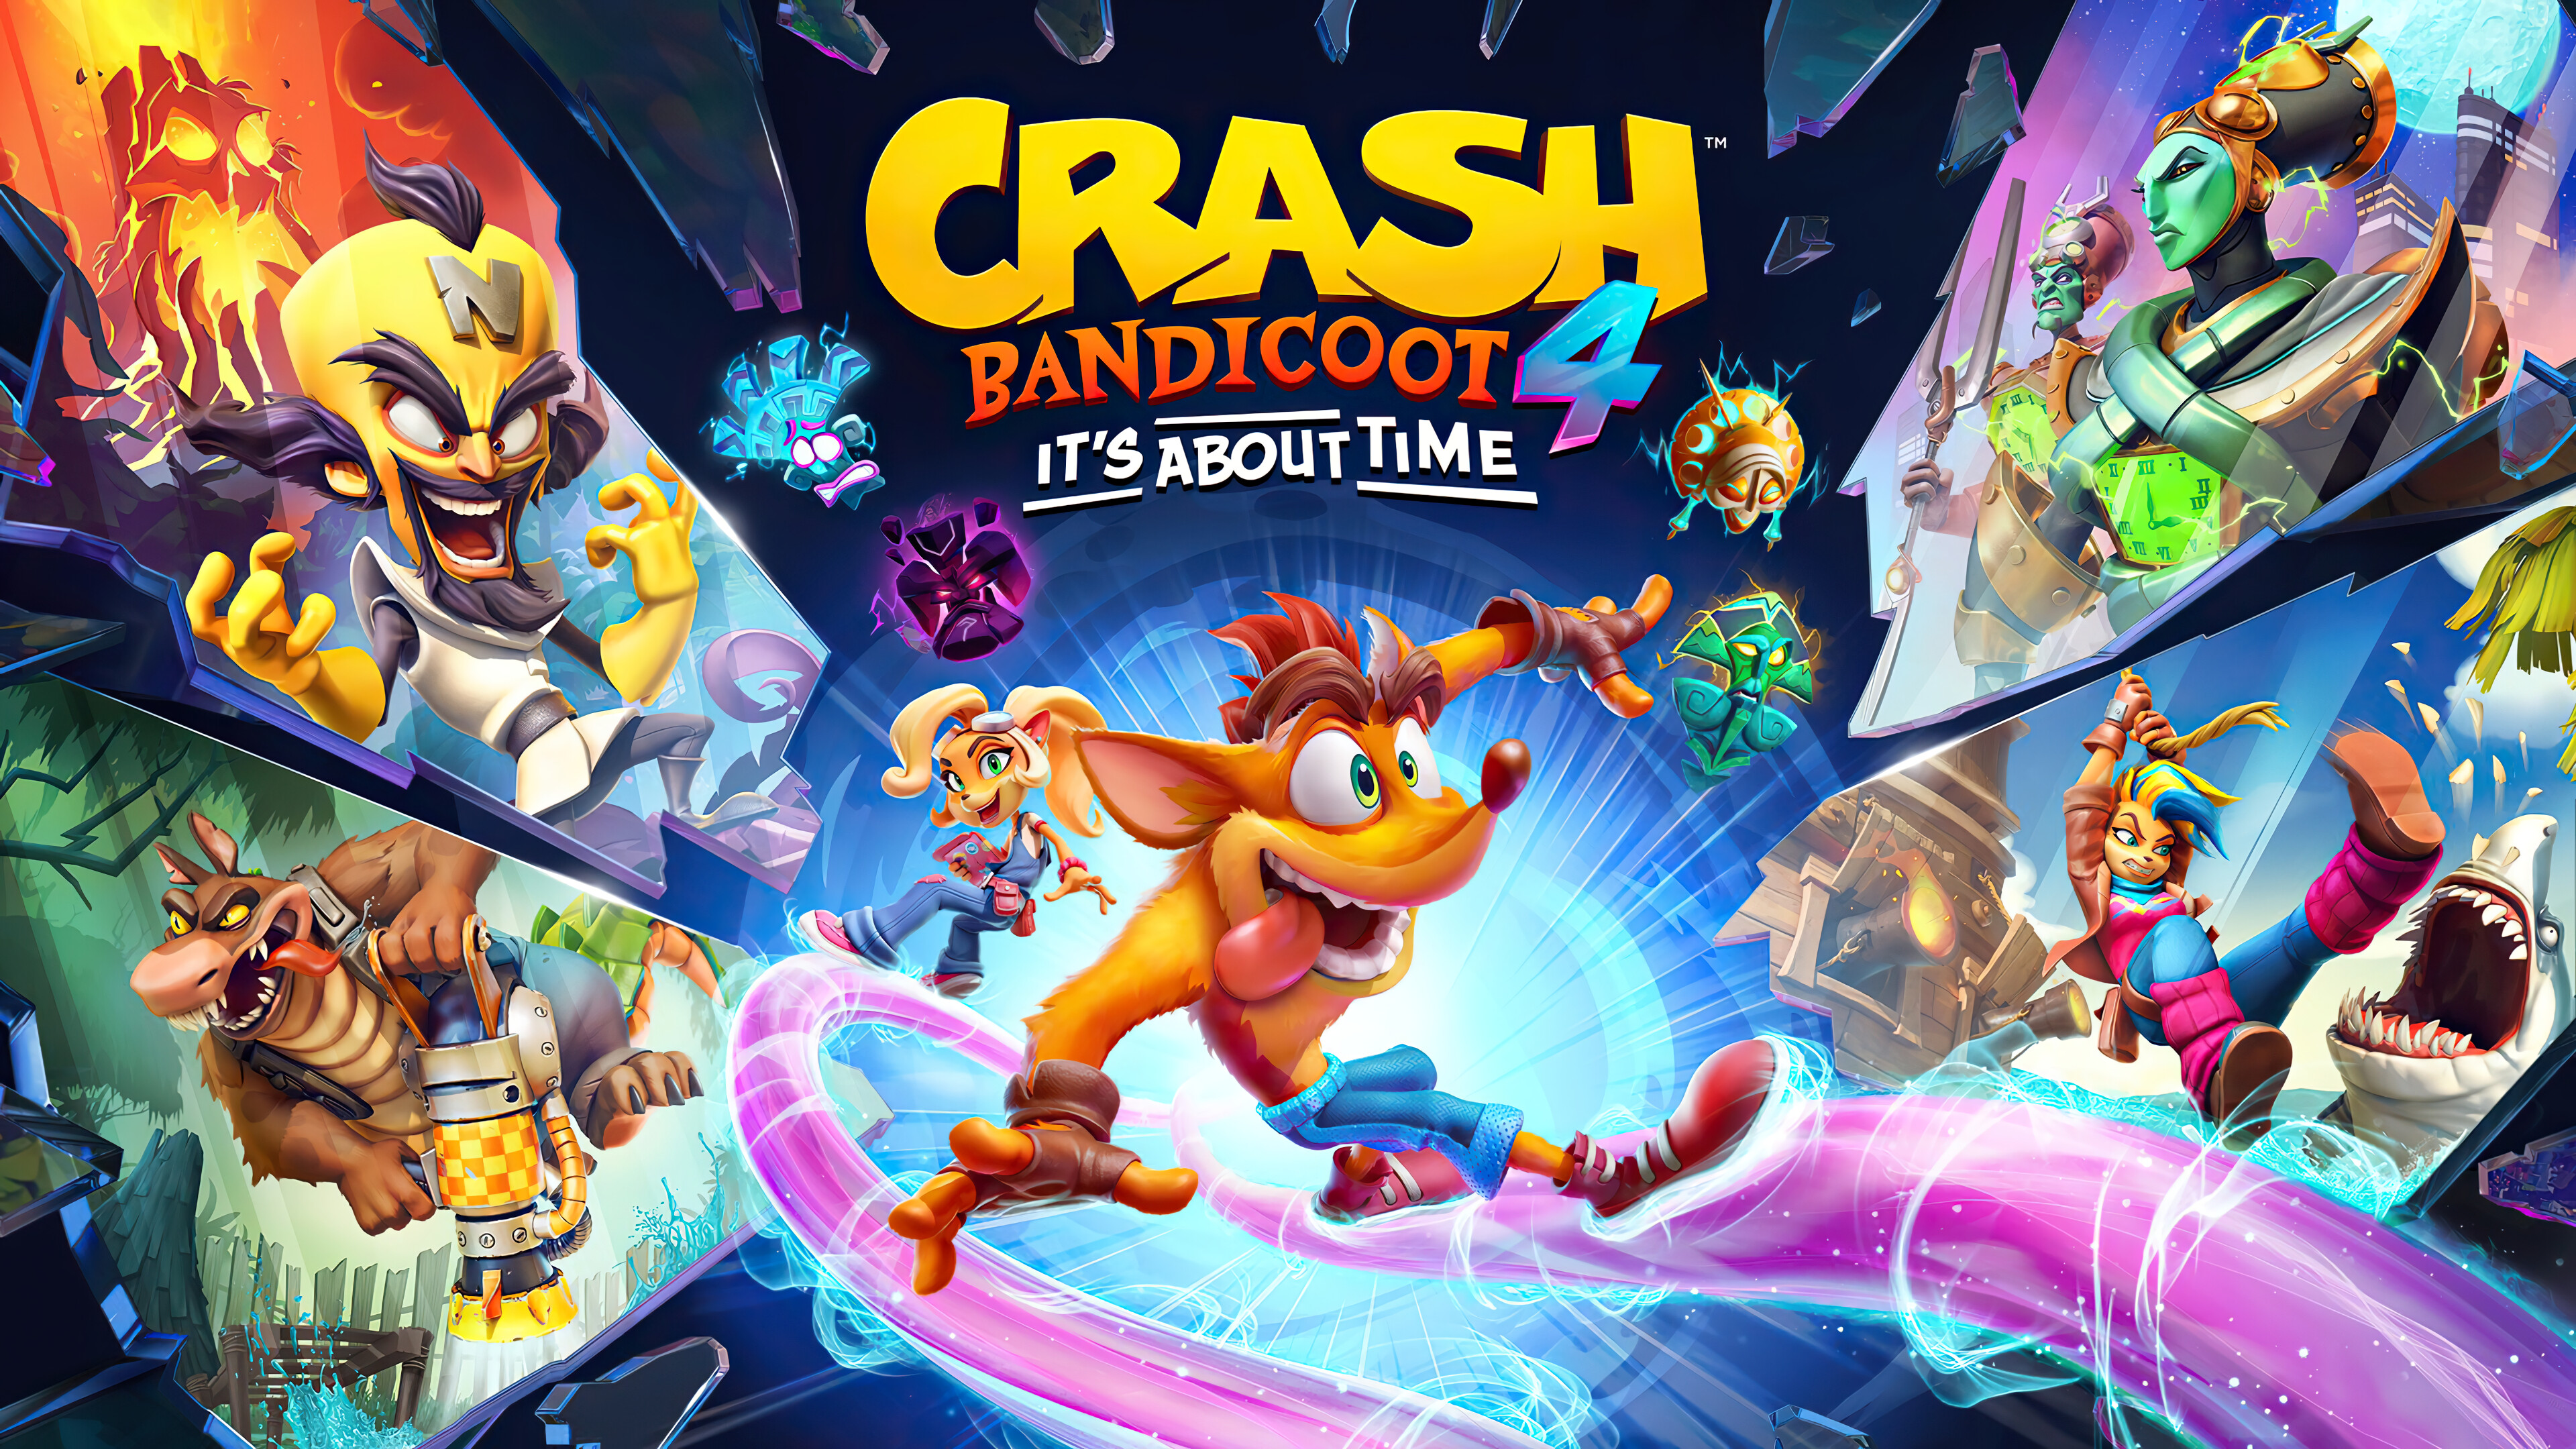 Crash Bandicoot 4 Its About Time Game HD 4K Wallpaper 32876